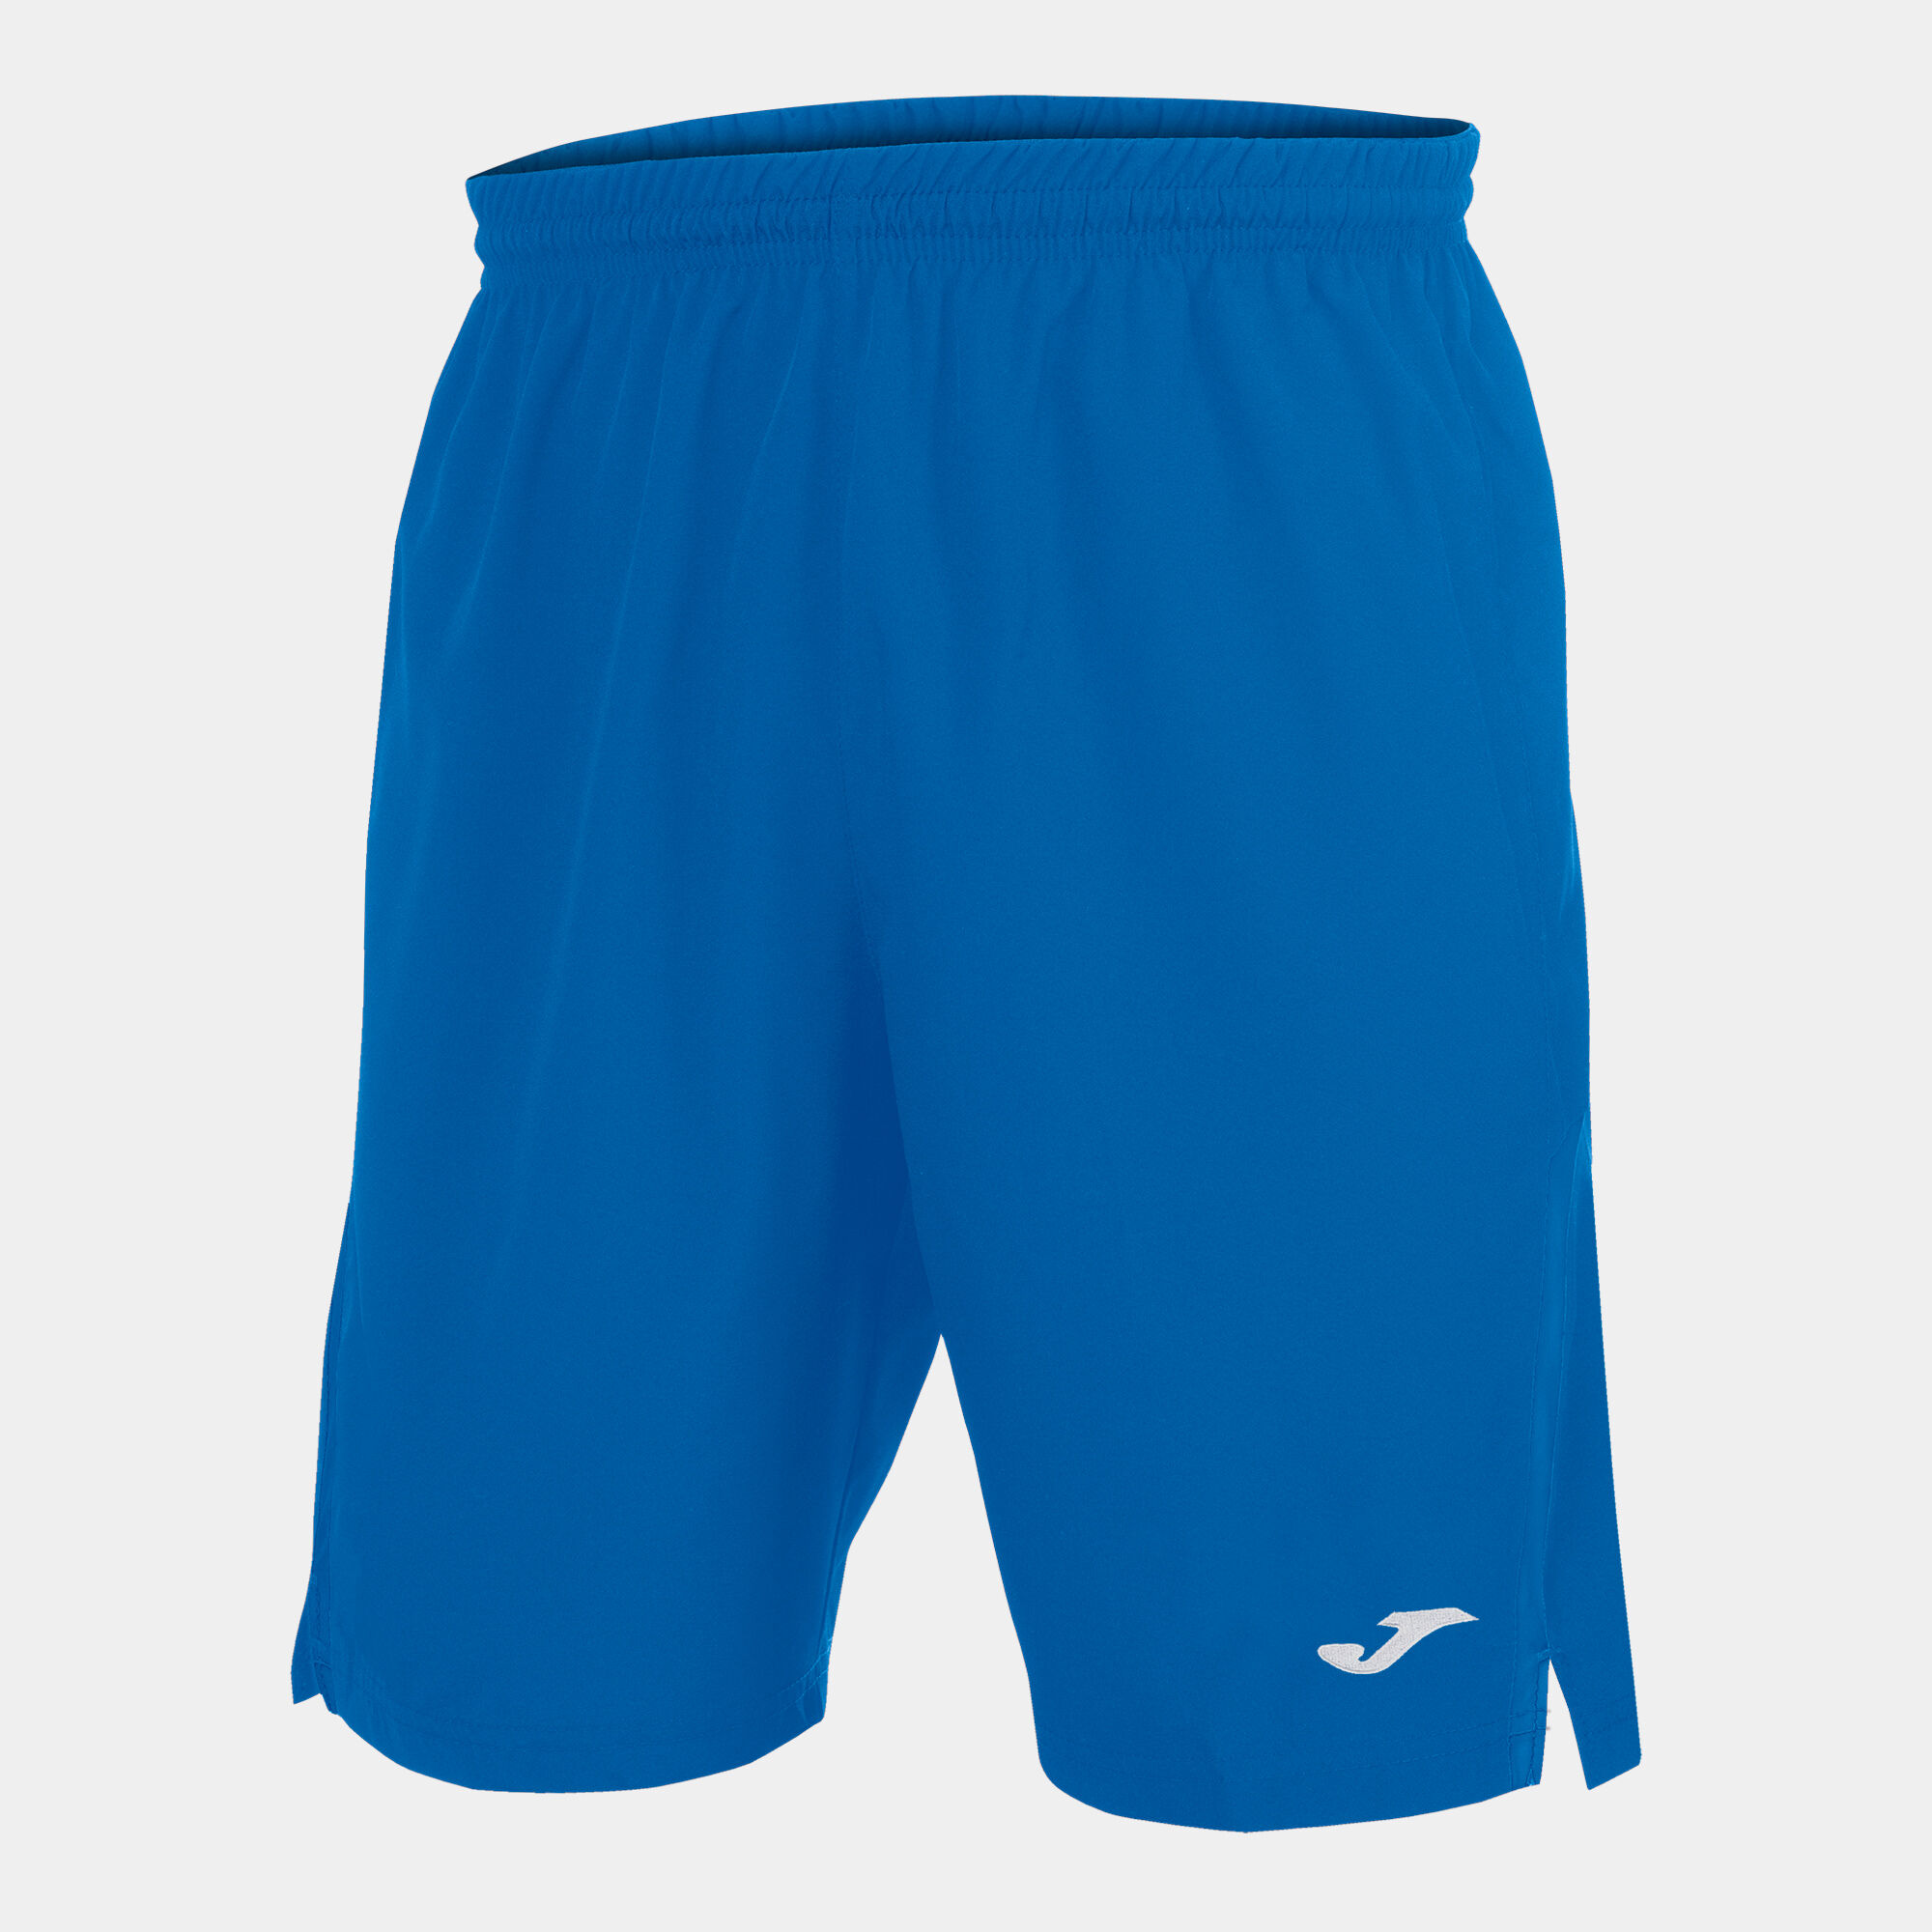 Shorts man Eurocopa II royal blue